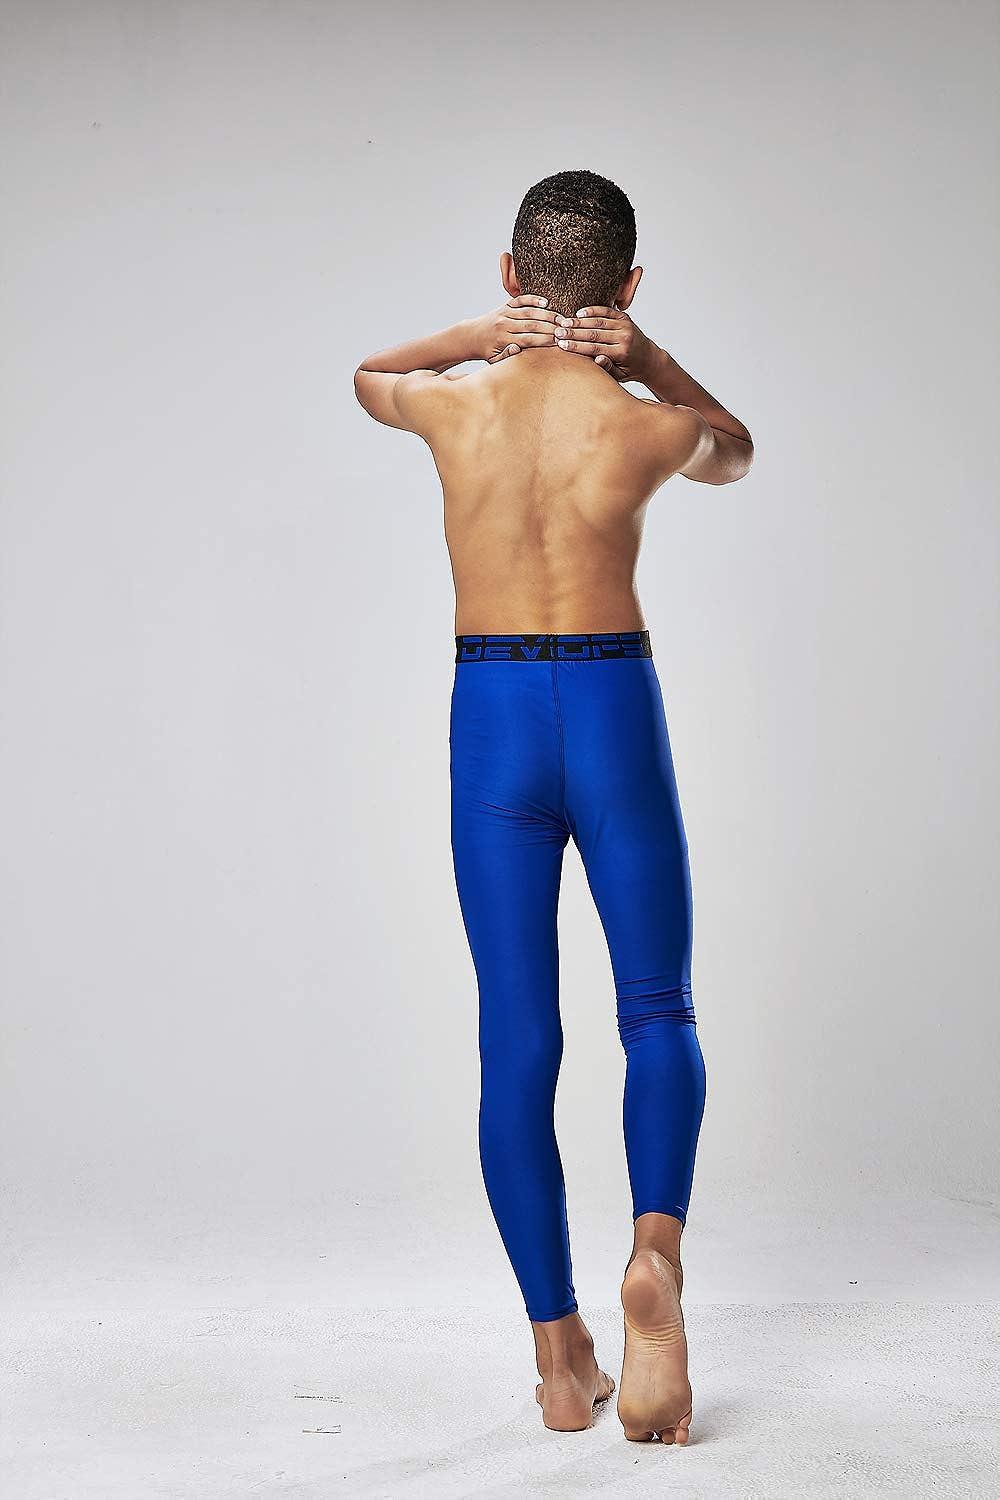 DEVOPS Boys 2 3 Pack UPF 50+ Compression Tights Sport Leggings Baselayer  Pants Medium #1(3pack) Black / Charcoal / Blue